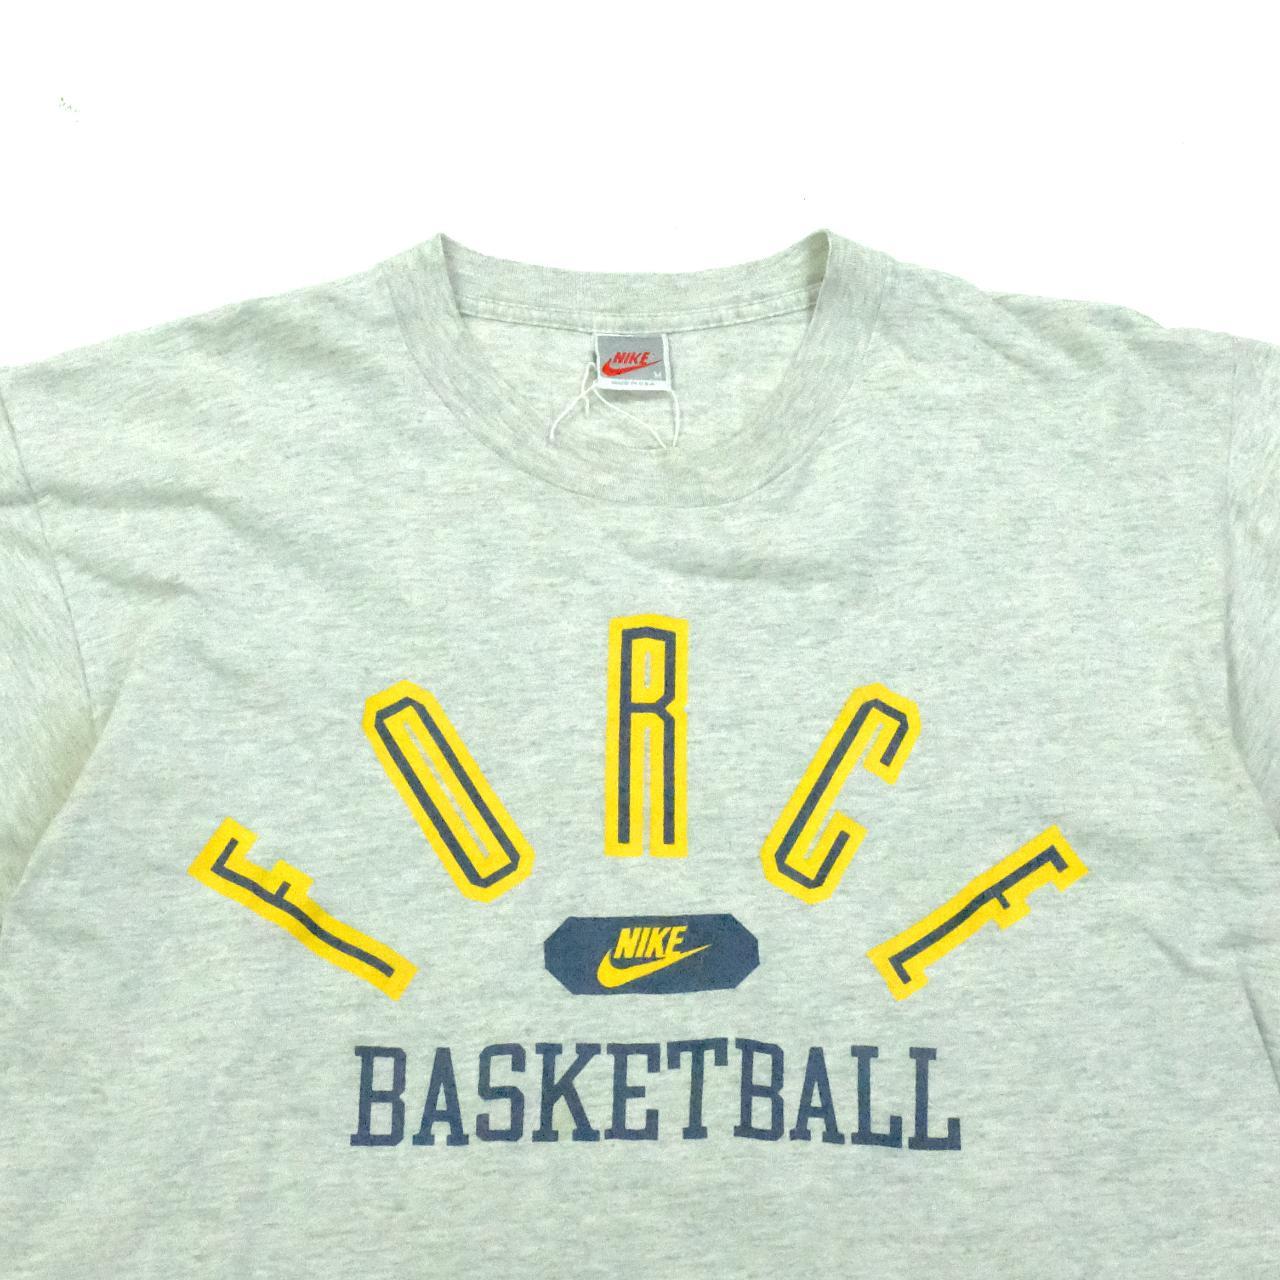 Nike Basketball T-shirt